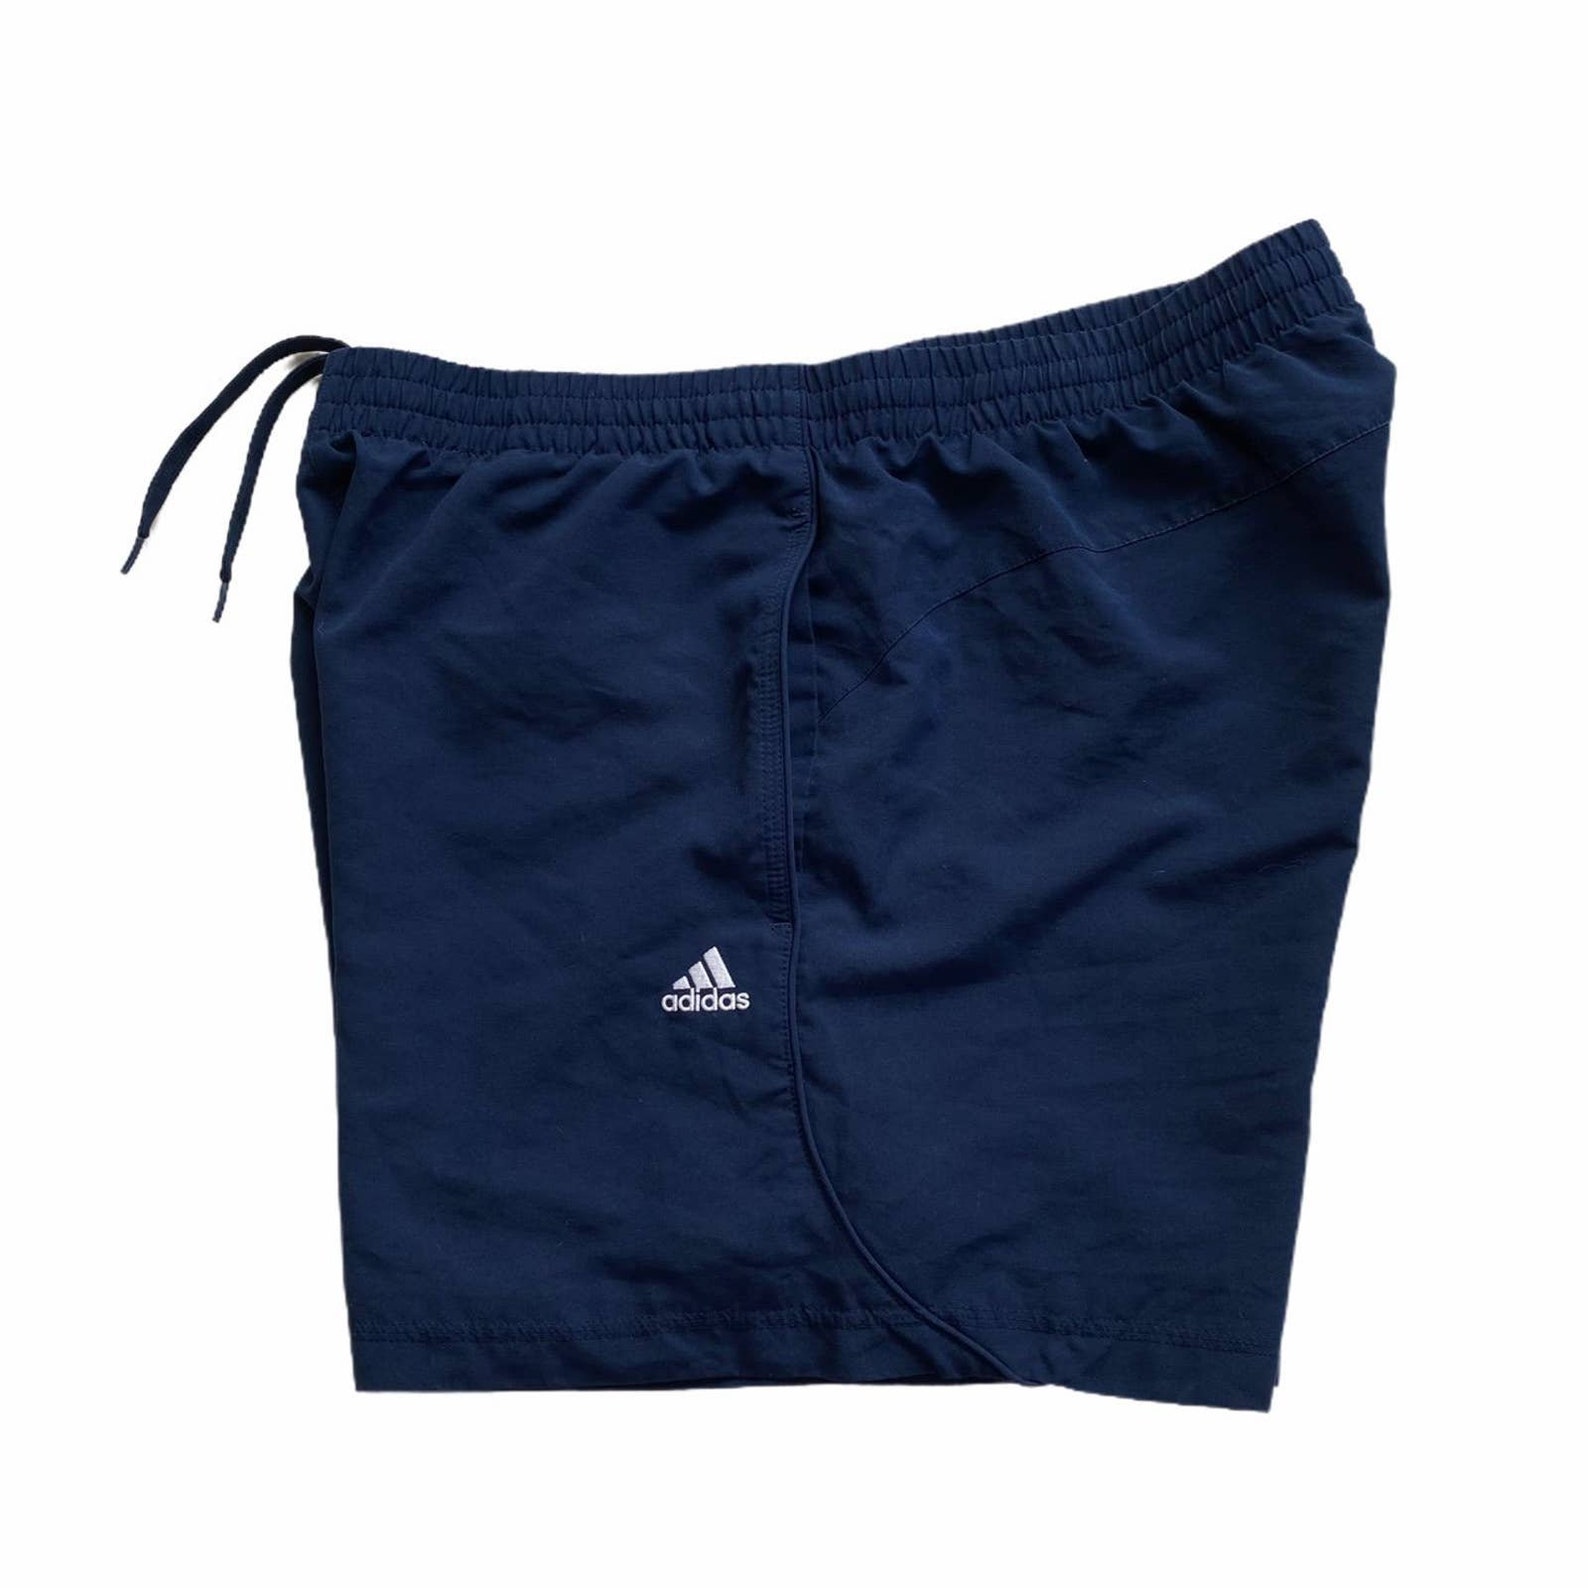 Retro Adidas windbreaker sport shorts plain solid navy blue & | Etsy